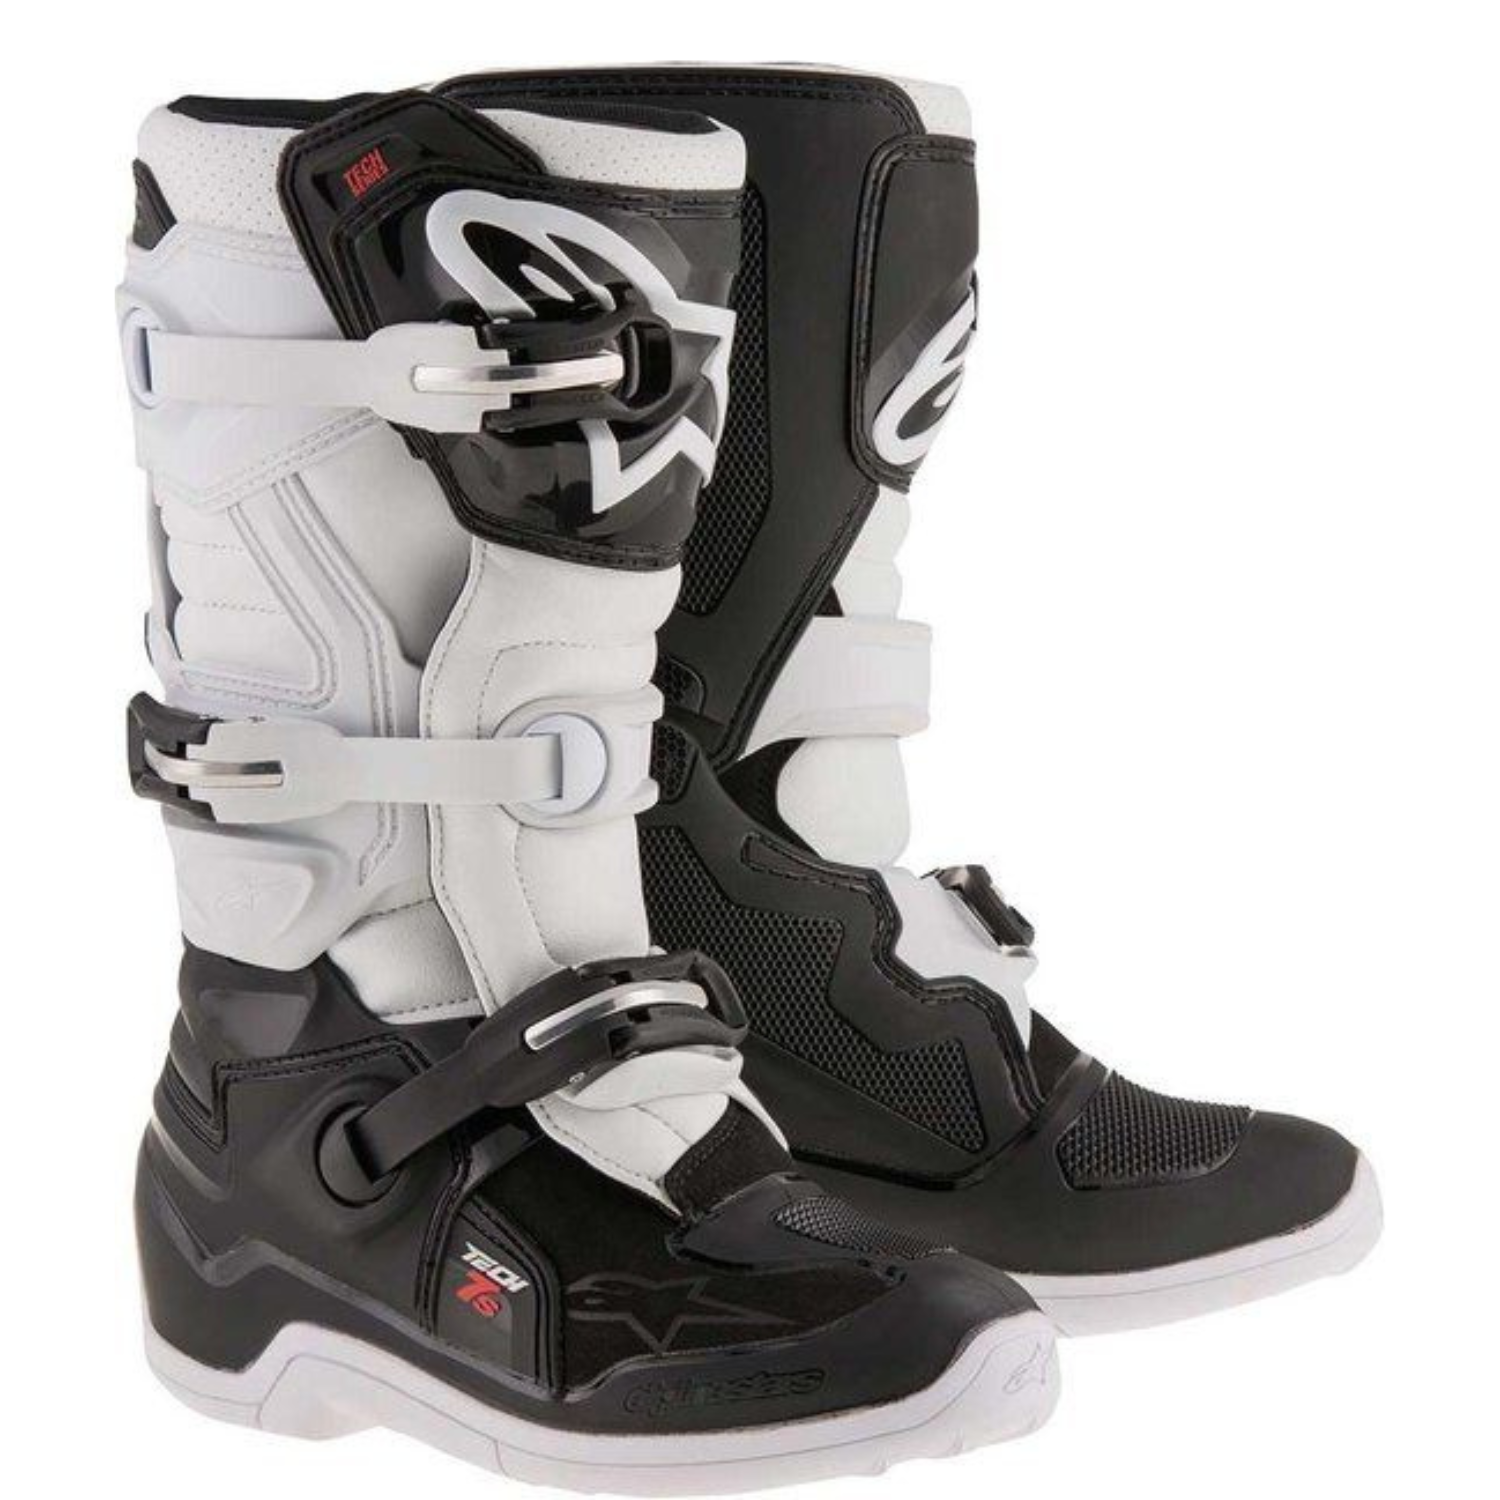 Image of Alpinestars Tech 7 S Black White Boots Talla US 4